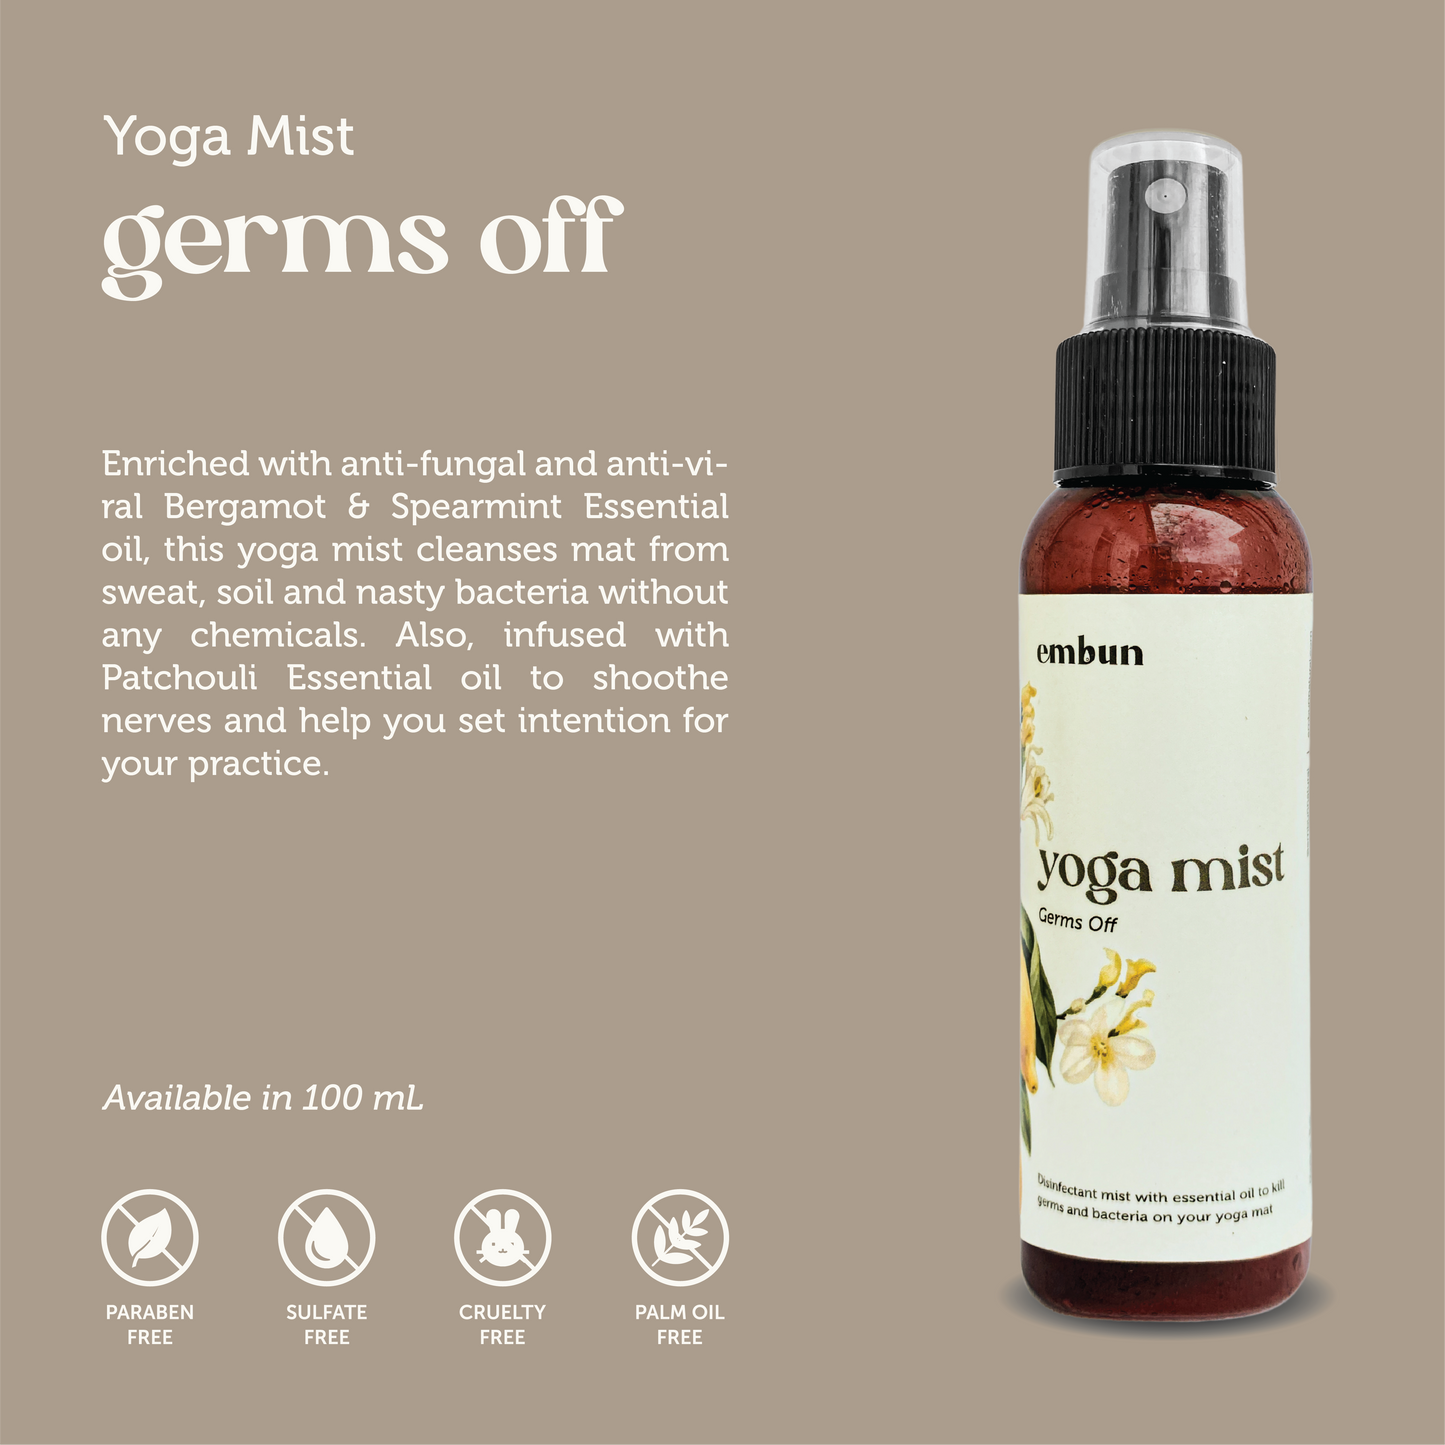 Yoga Mist Germs Off 100 ml